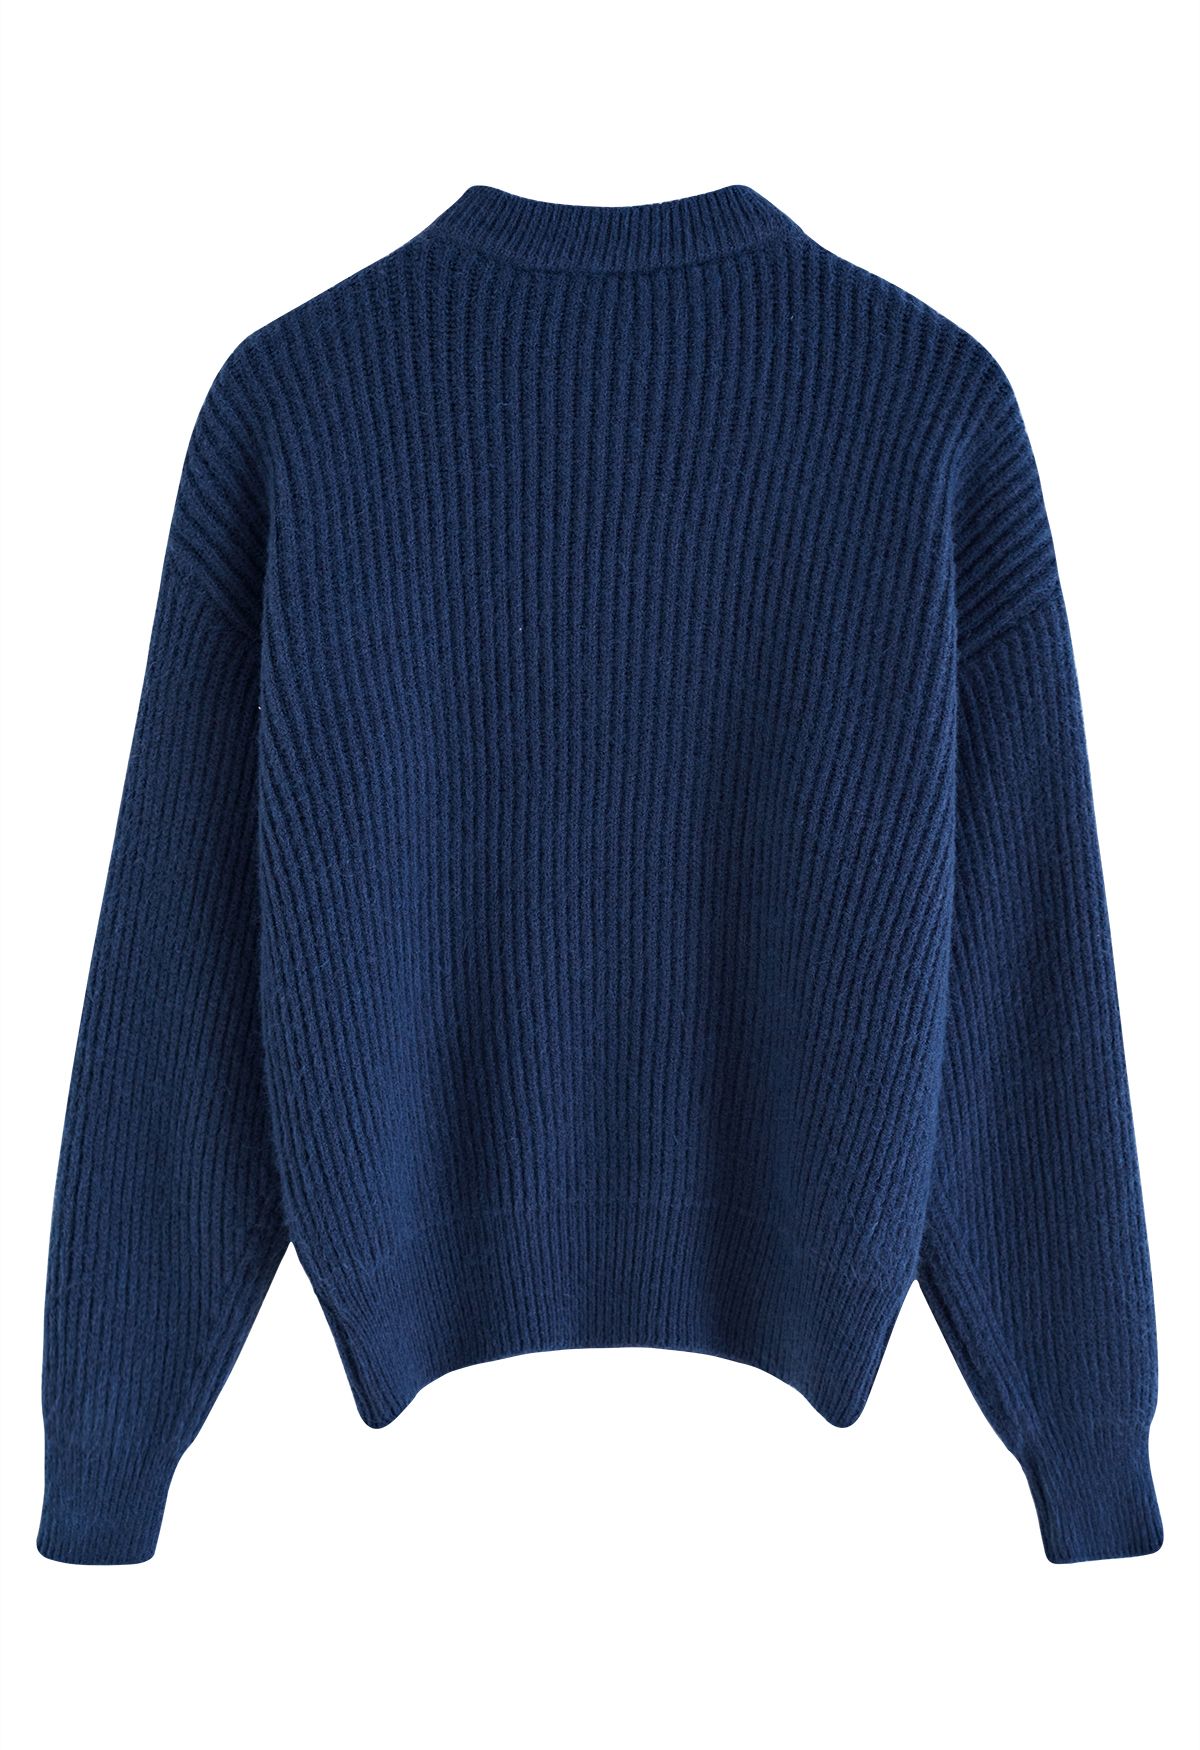 Solid Color Rib Knit Sweater in Indigo